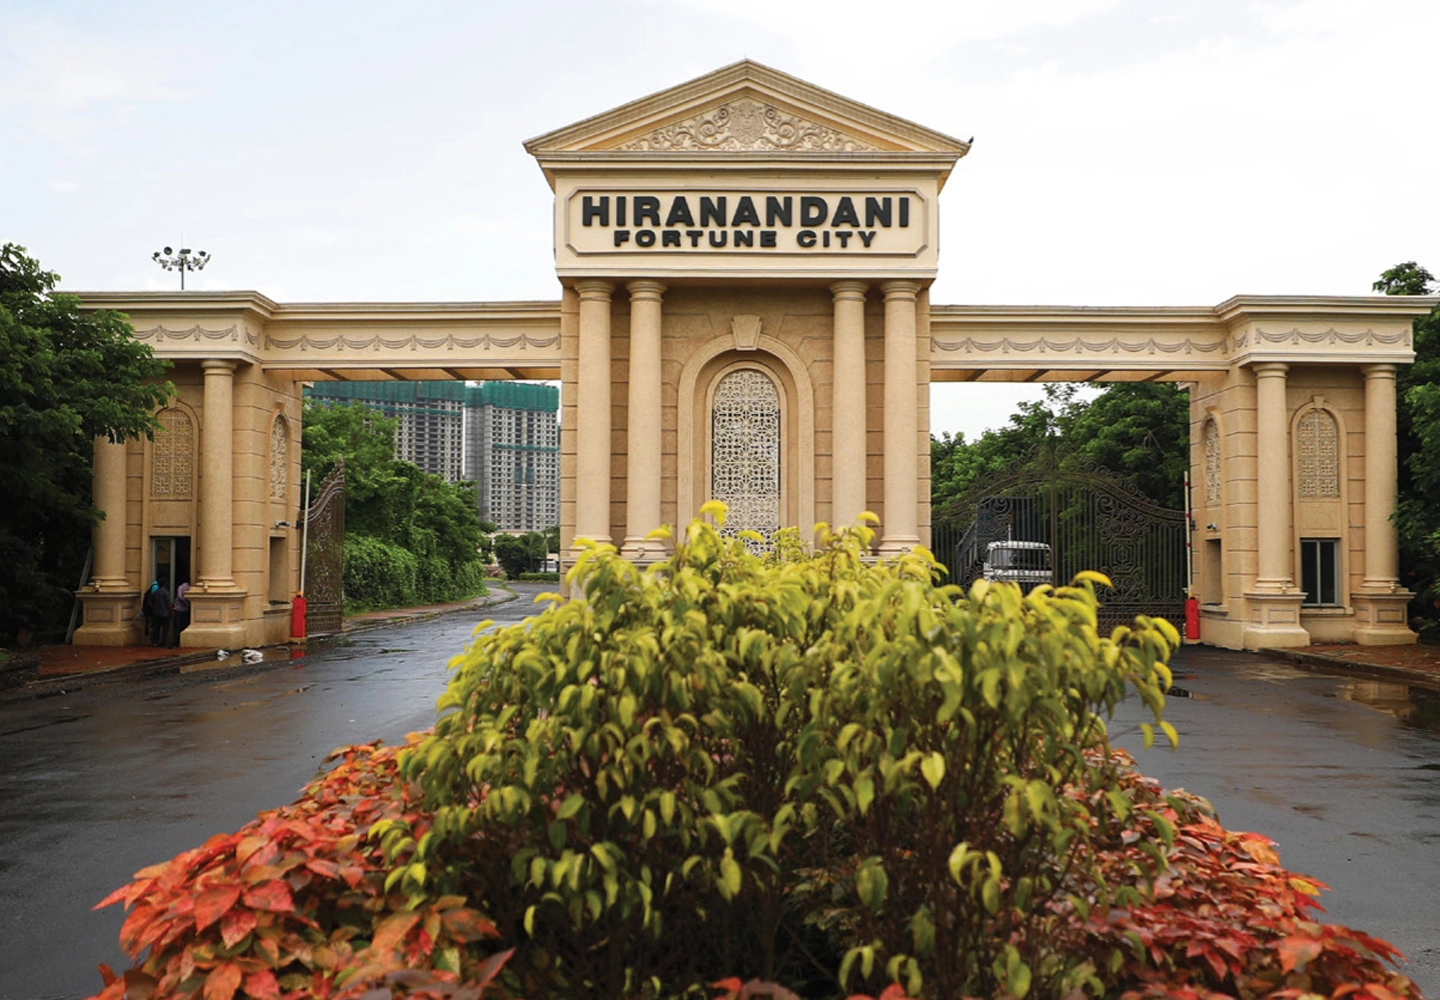 Hiranandani Fortune city panvel project